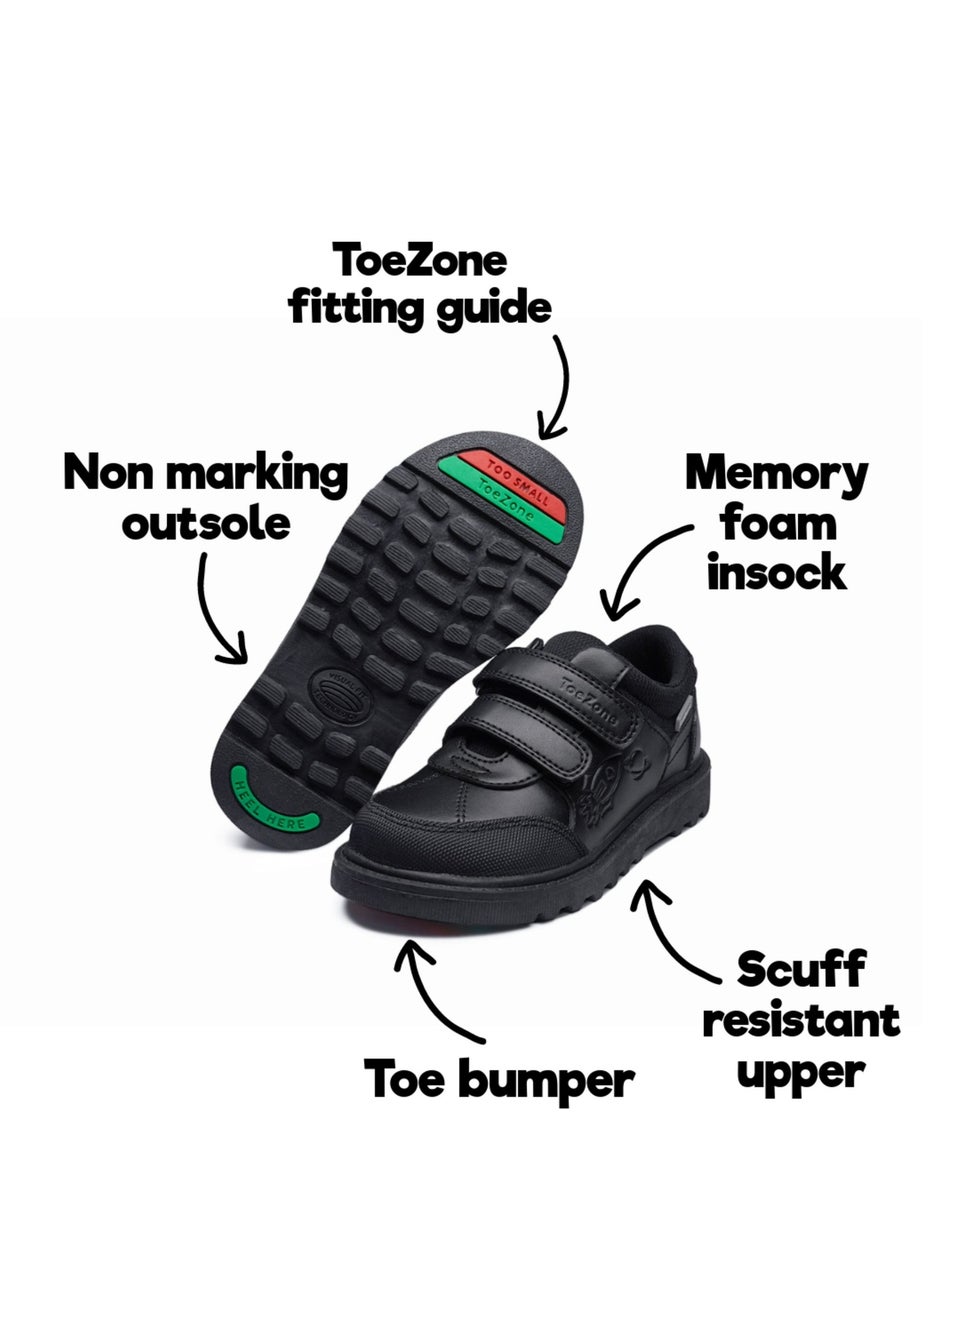 ToeZone Boys Black Cade Space Novelty Shoe (Younger 8-Older 3)